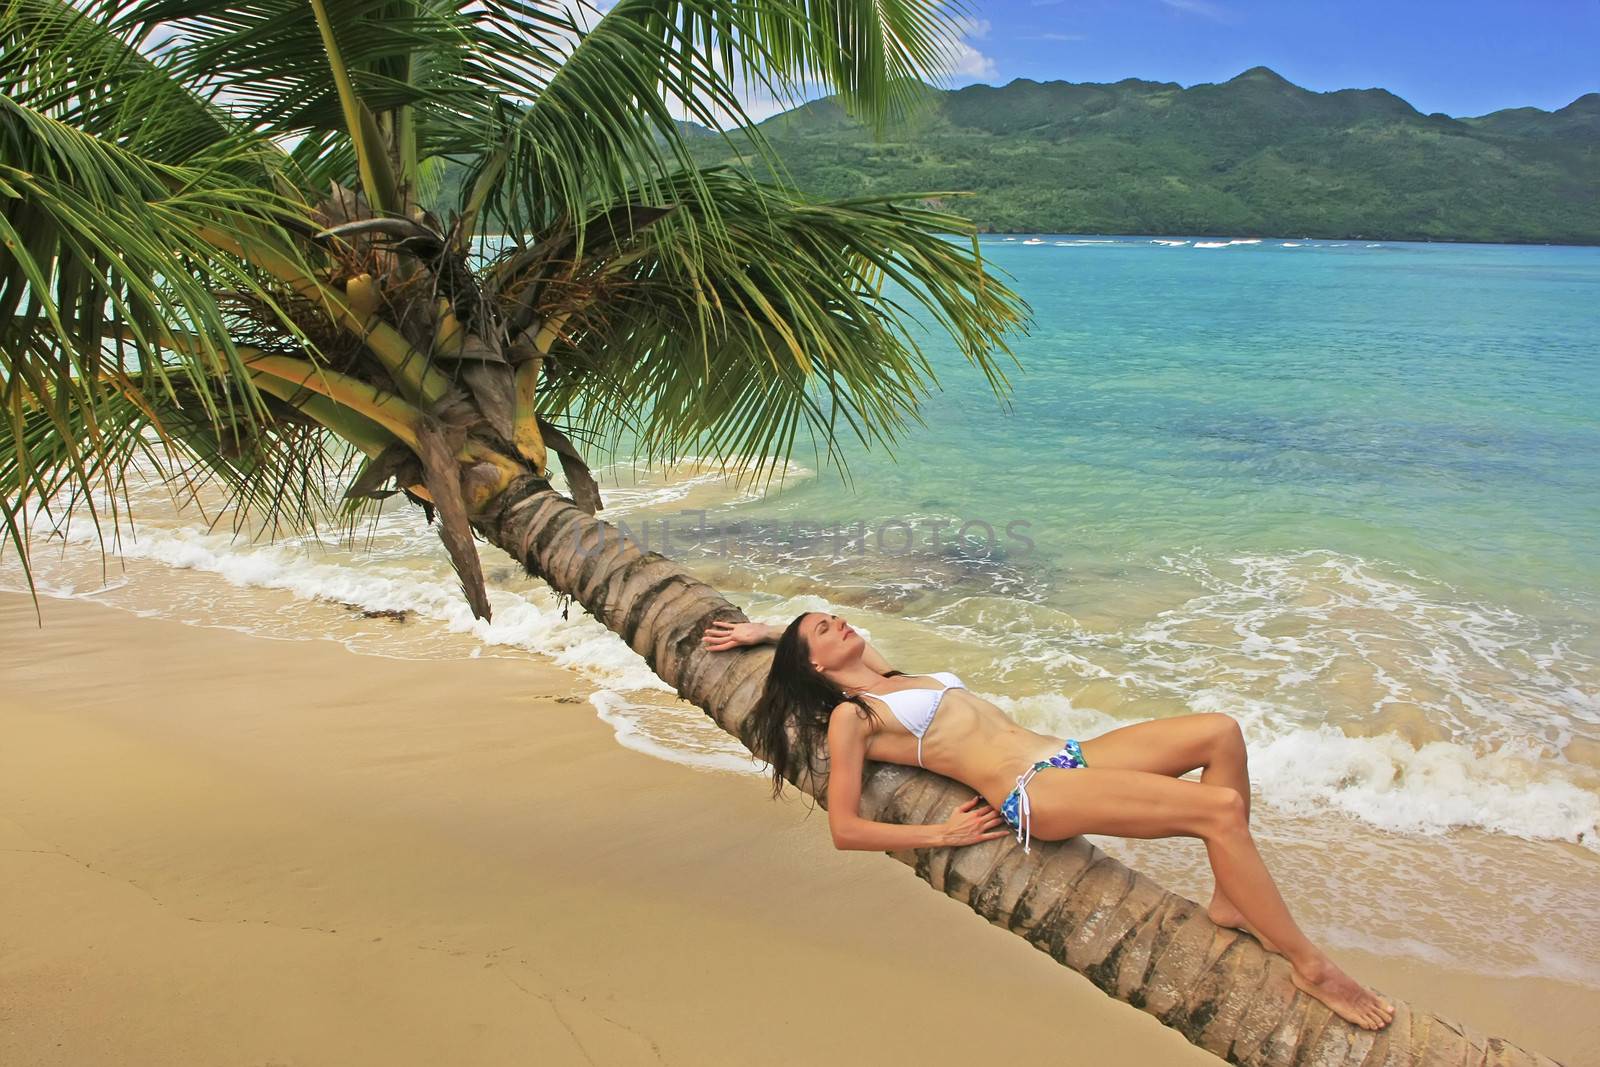 Young woman in bikini laying on leaning palm tree at Rincon beach, Samana peninsula, Dominican Republic